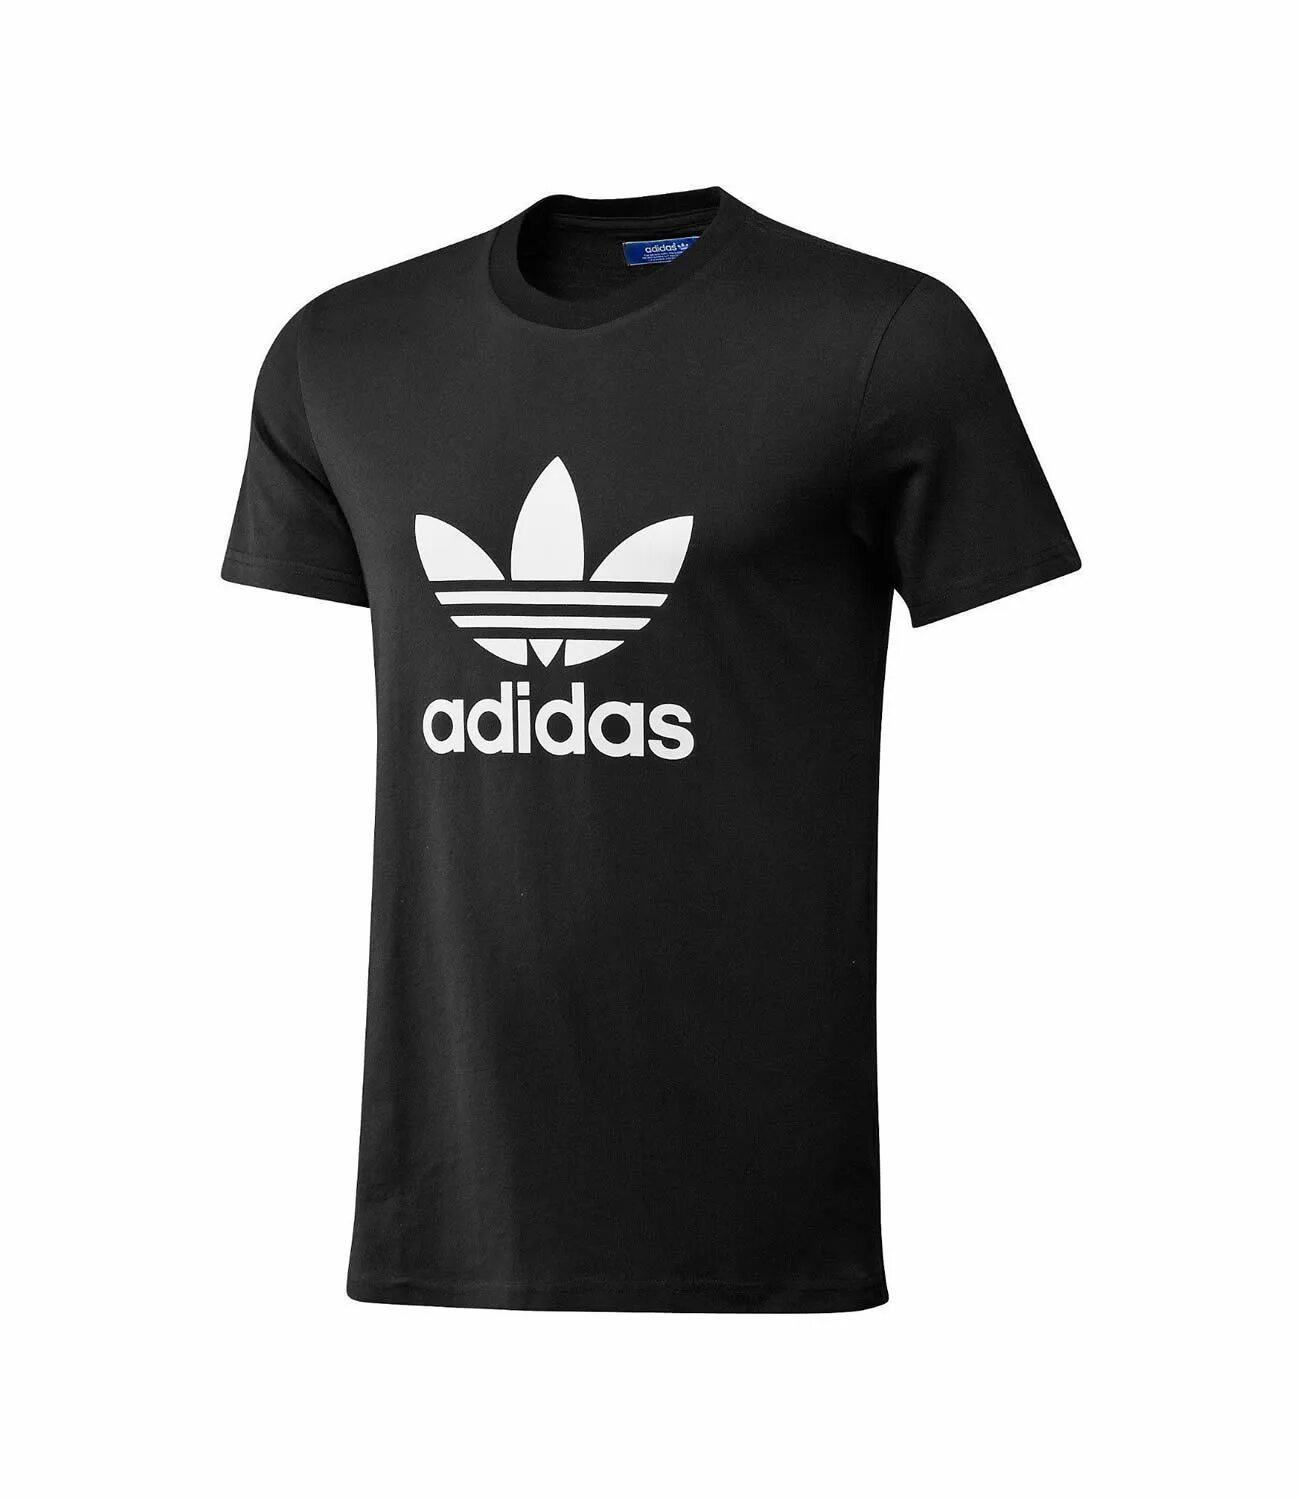 Adidas Printshop. T-Shirt adidas Black. Адидас т ширт. Adidas t Shirt New collection. Разные адидас